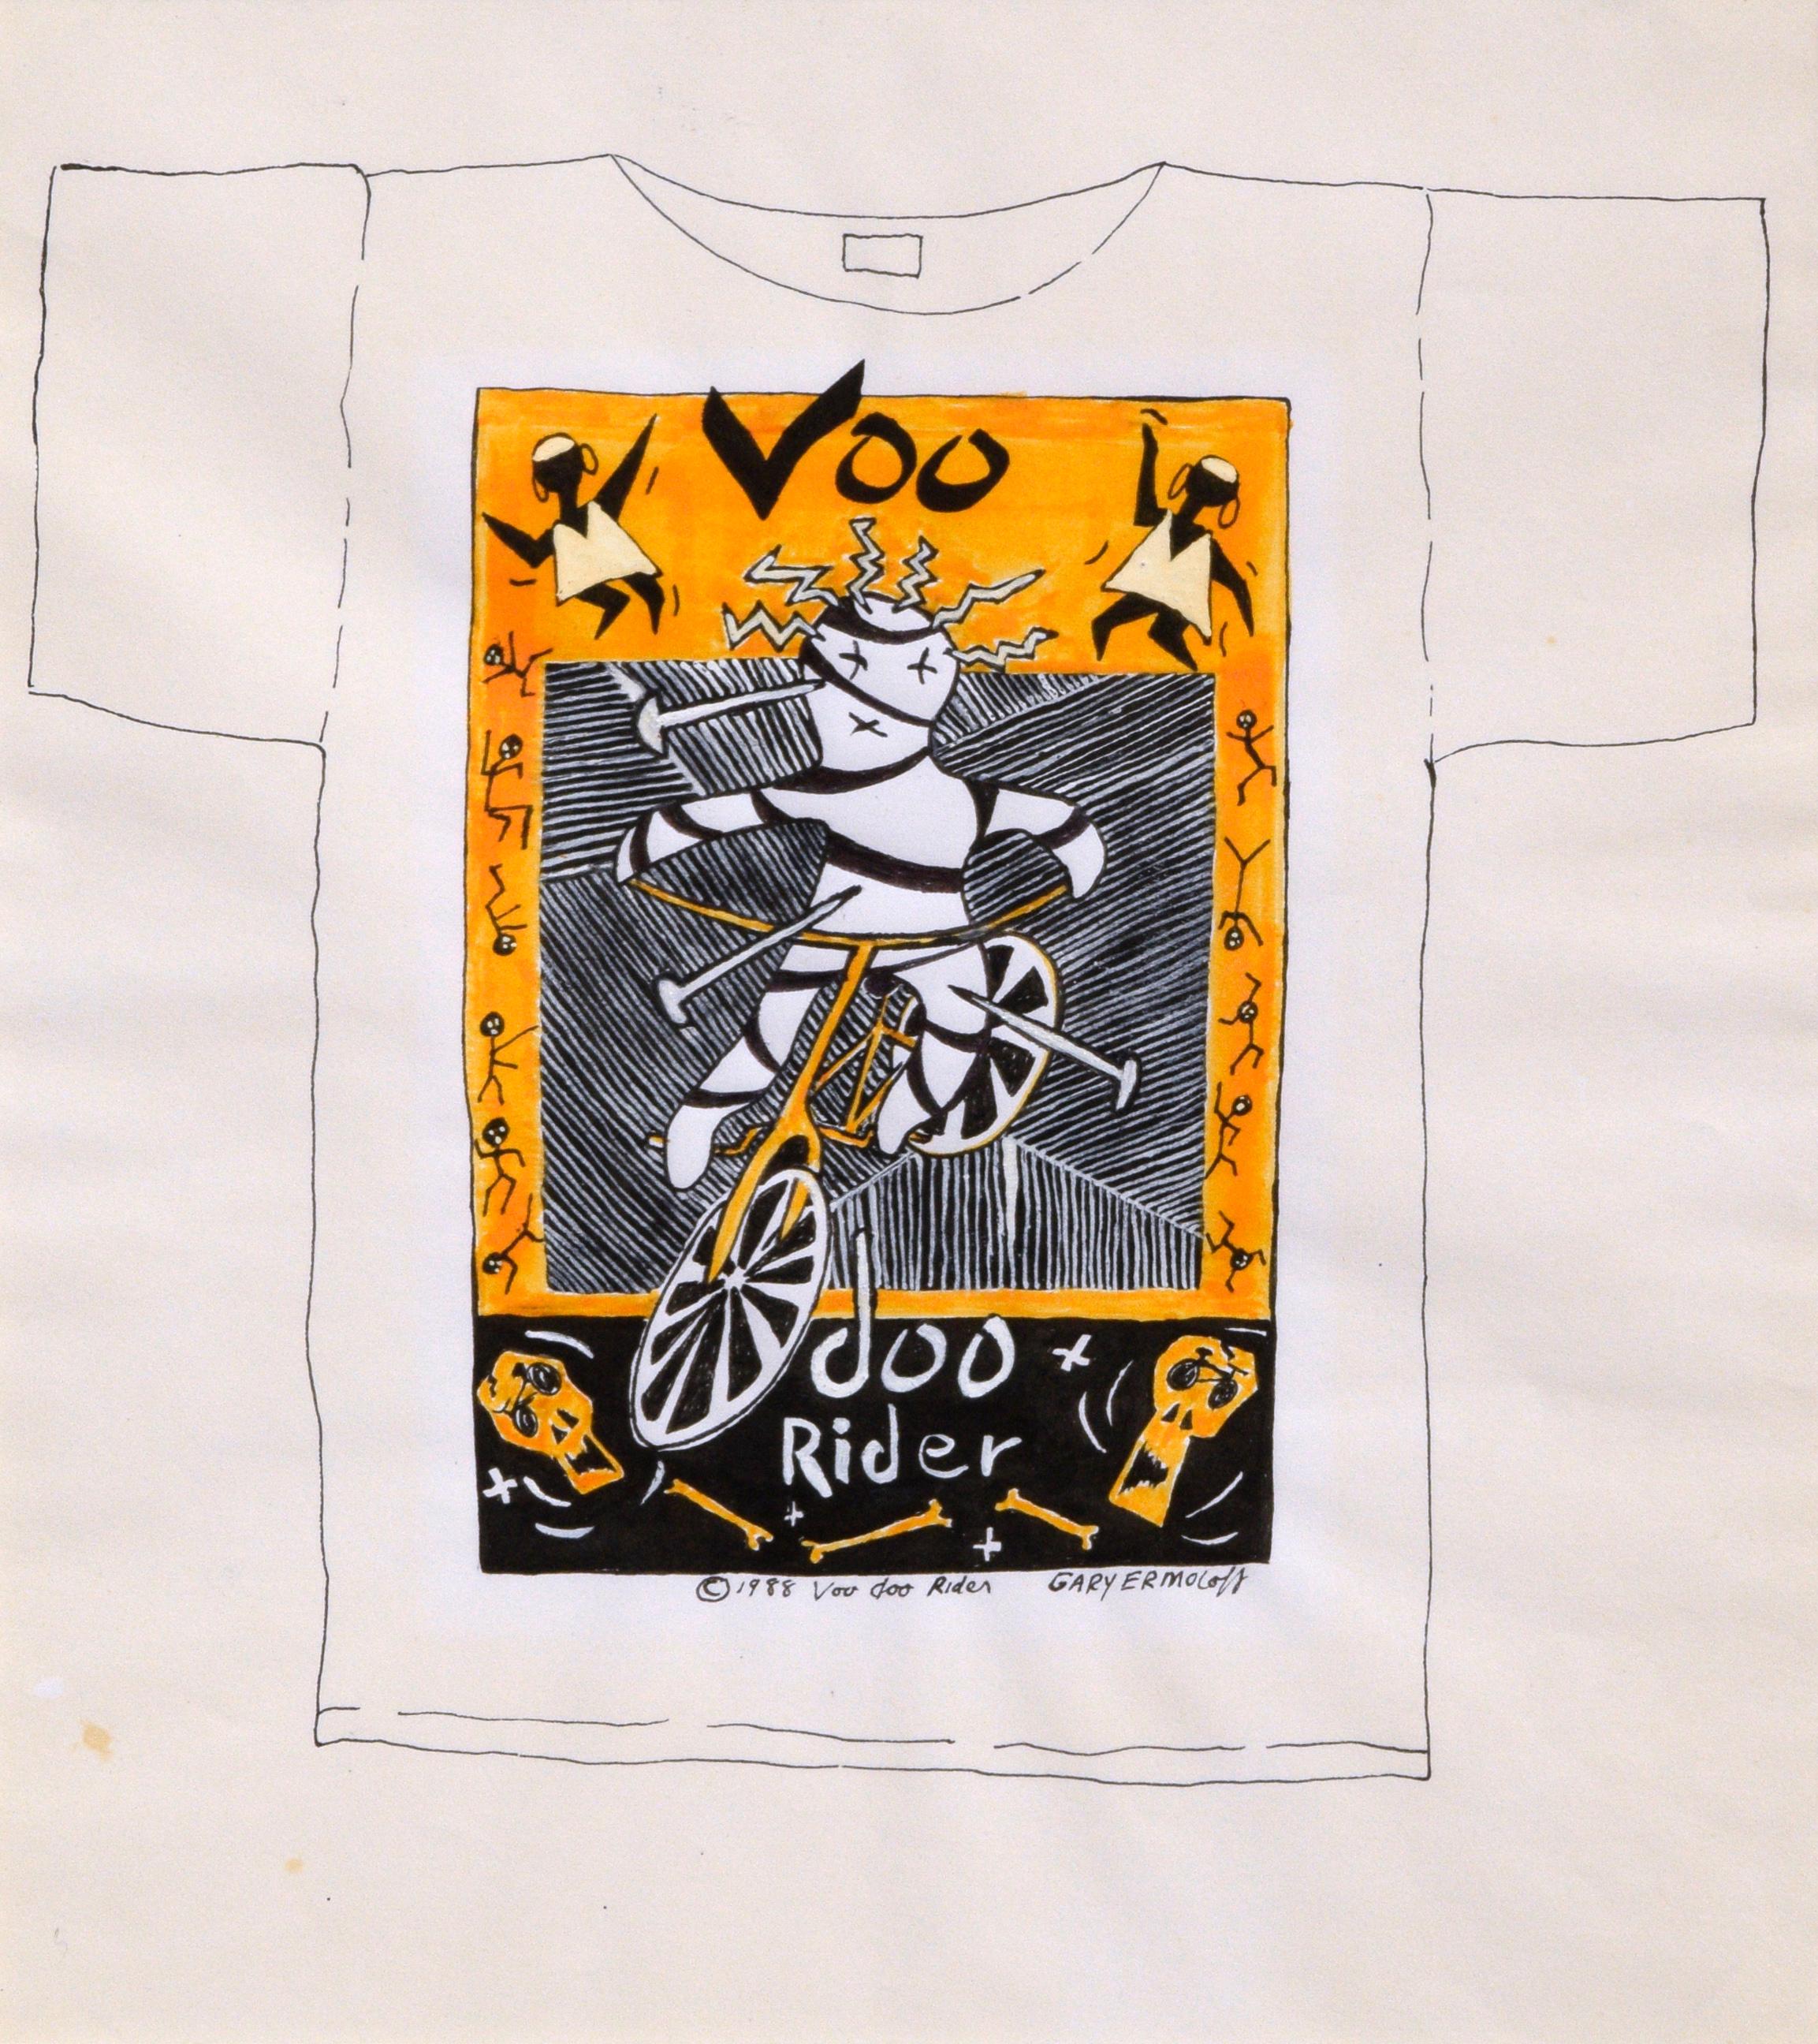 Voodoo Rider Original 1980's T-Shirt Design Drawing  - Painting by Gary Ermoloff